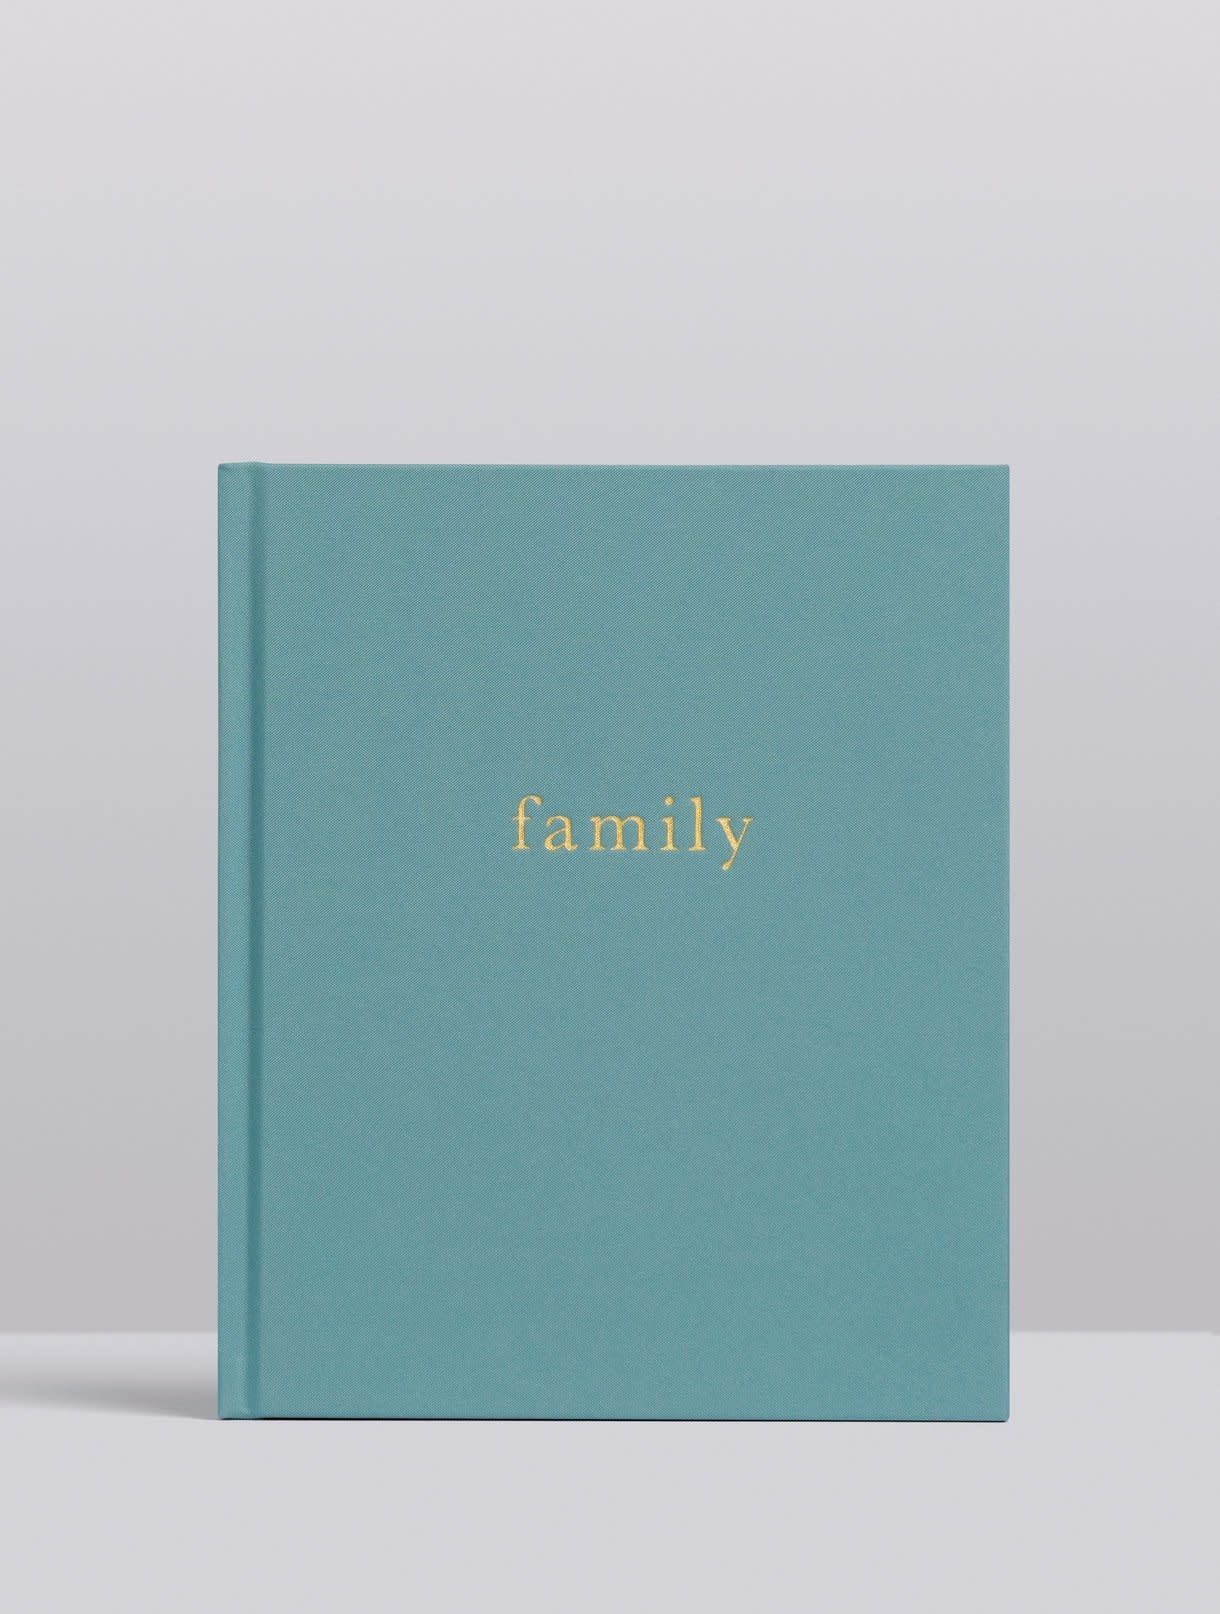 Write To Me Family. Our Family Book-1